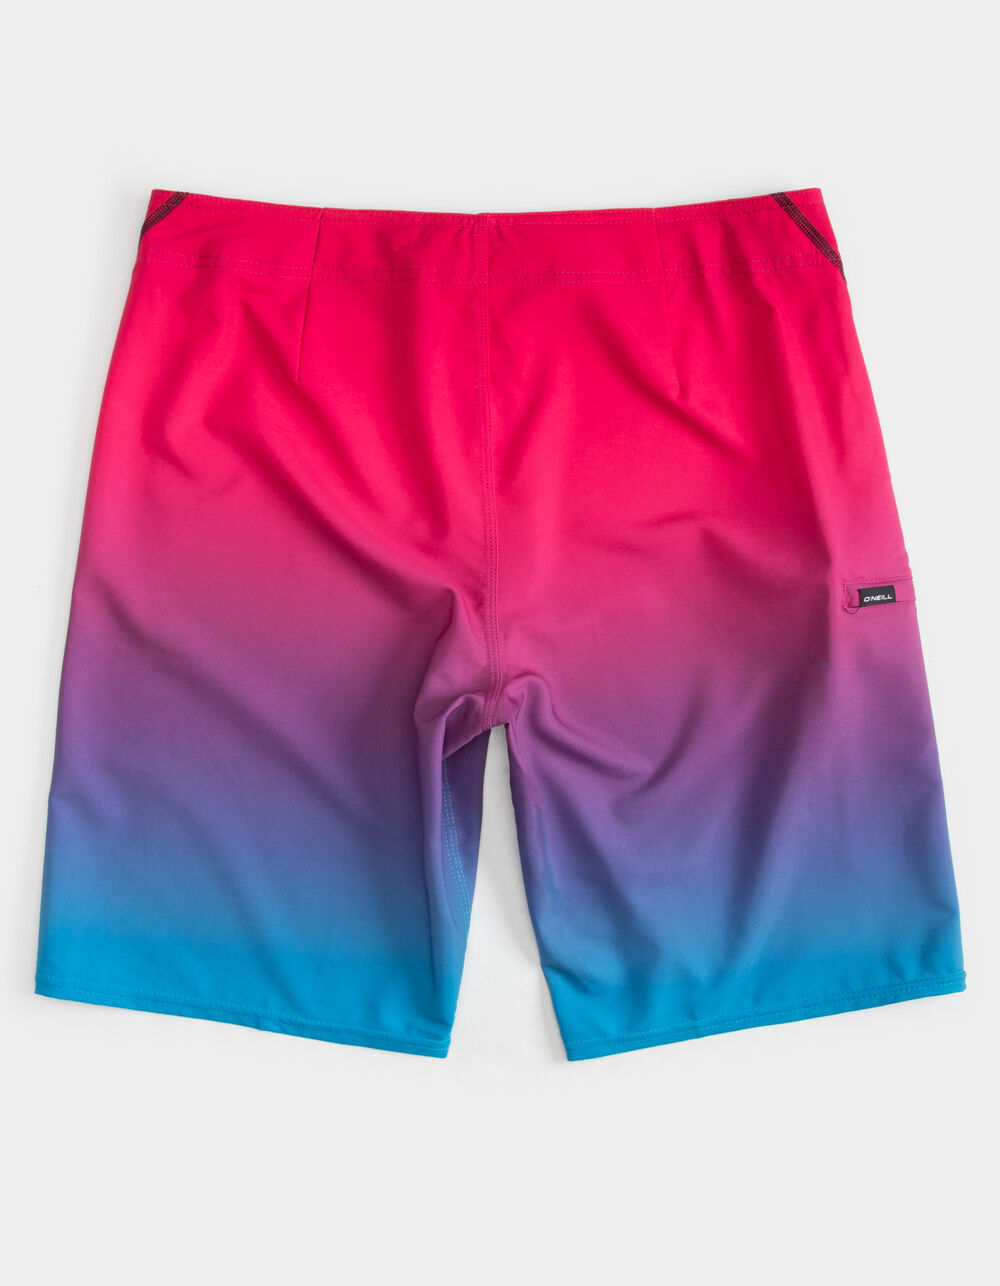 O'NEILL S Seam Mens Hot Pink Boardshorts - RED | Tillys